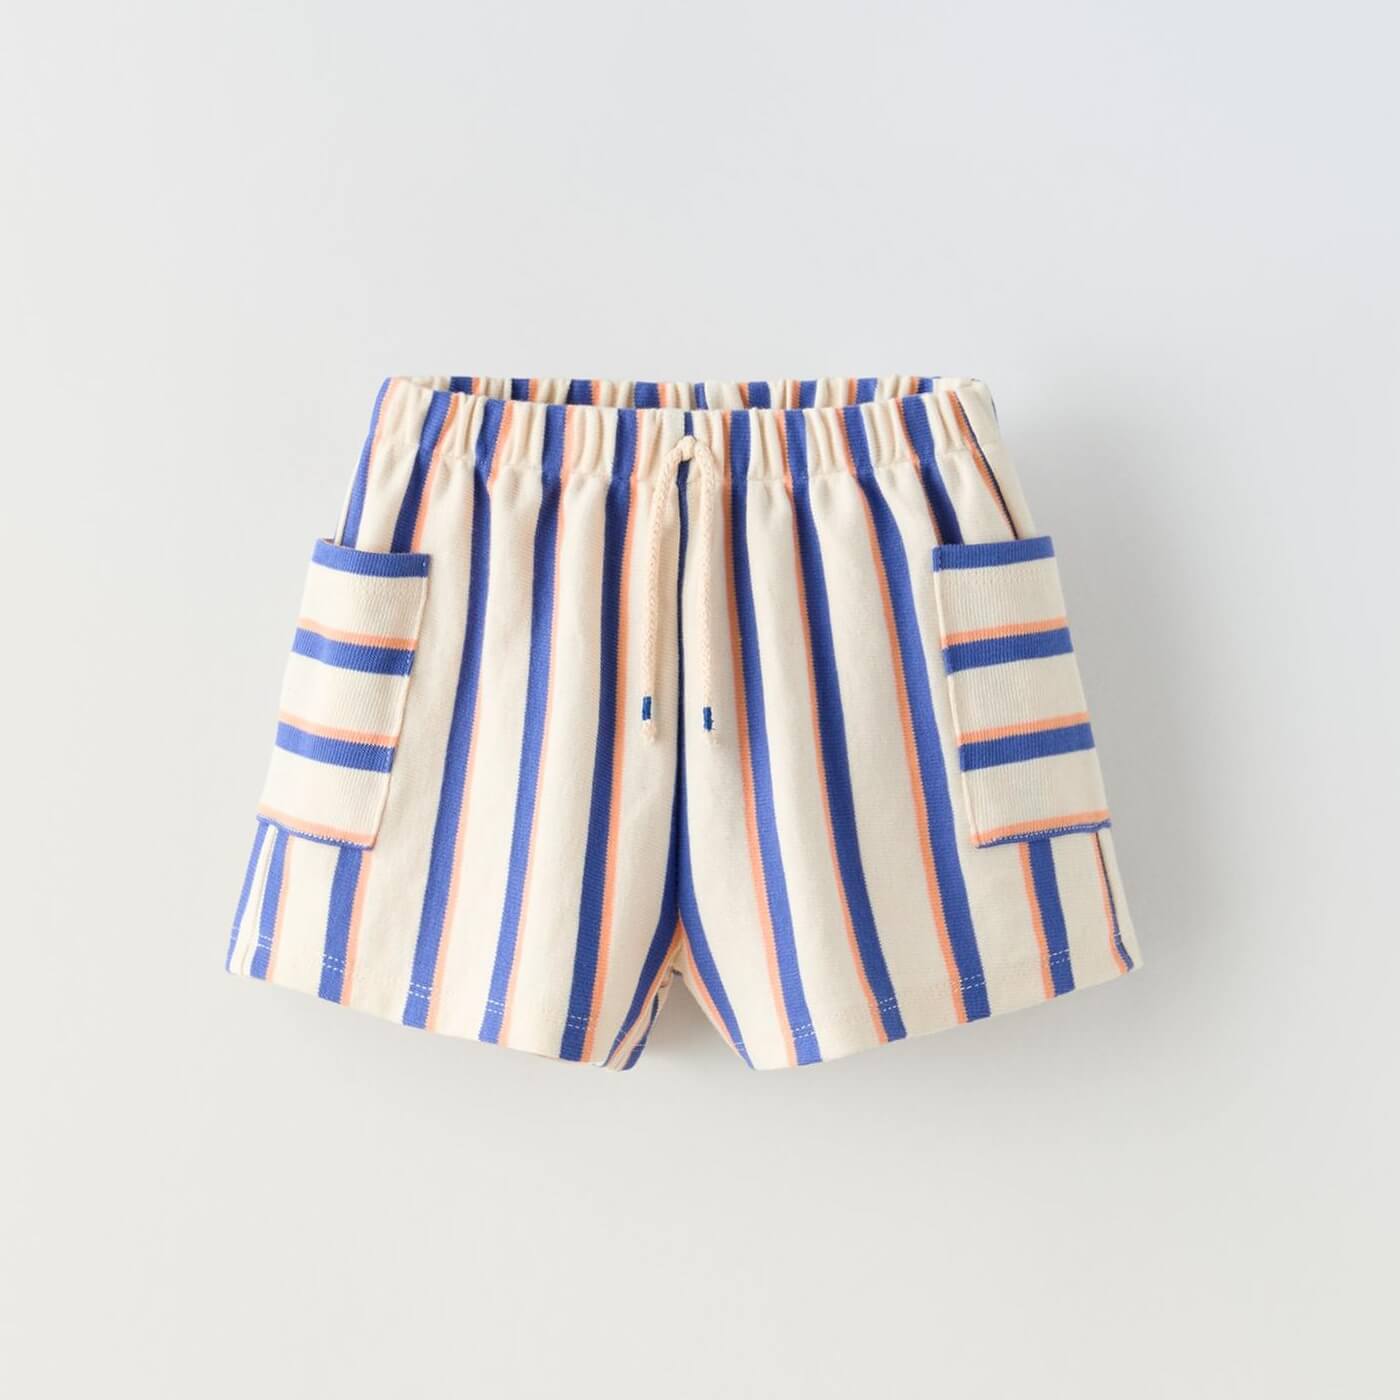 Шорты-бермуды Zara Summer Camp Striped Pockets, синий/бежевый